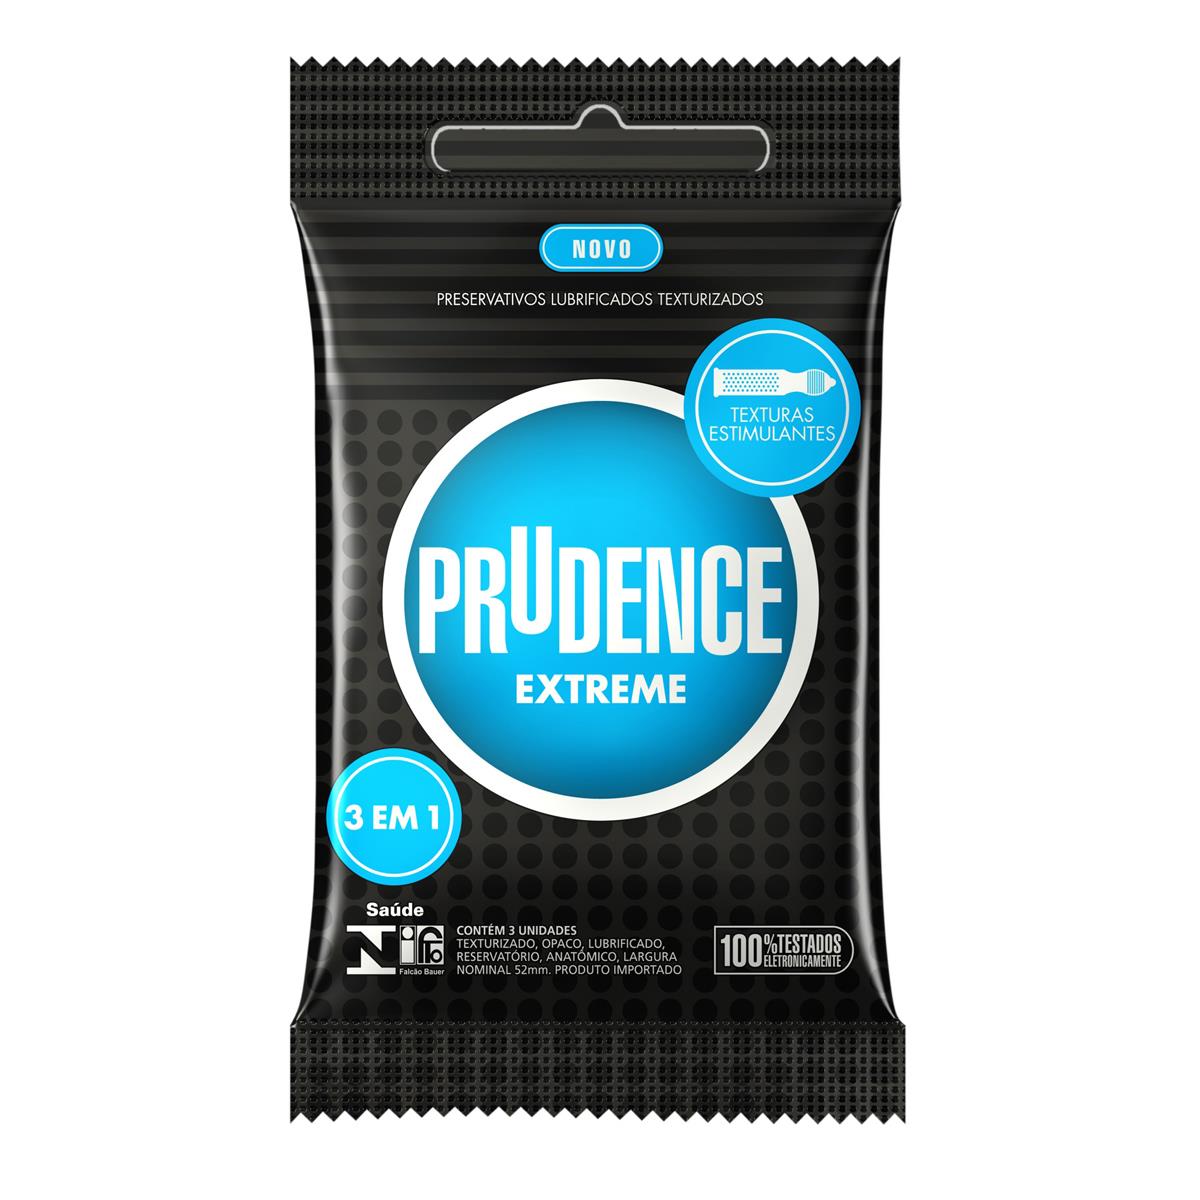 Preservativos Extreme Prudence